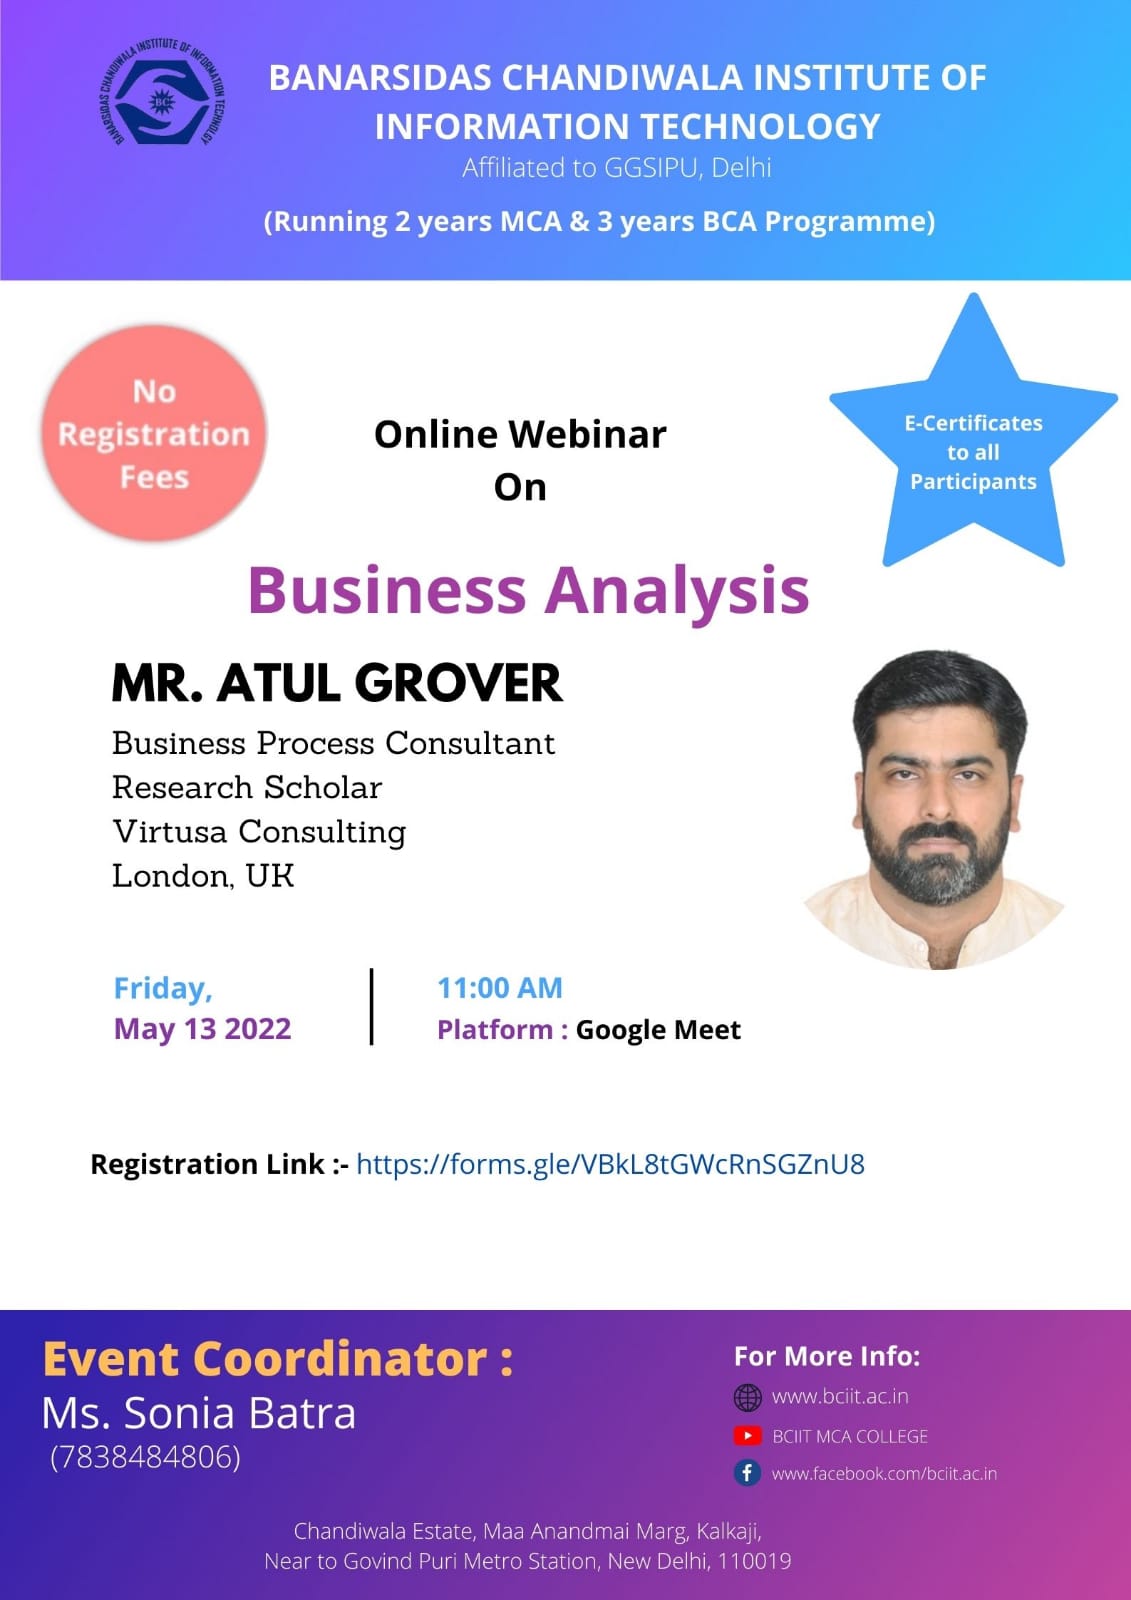 Online Webinar on Business Analysis